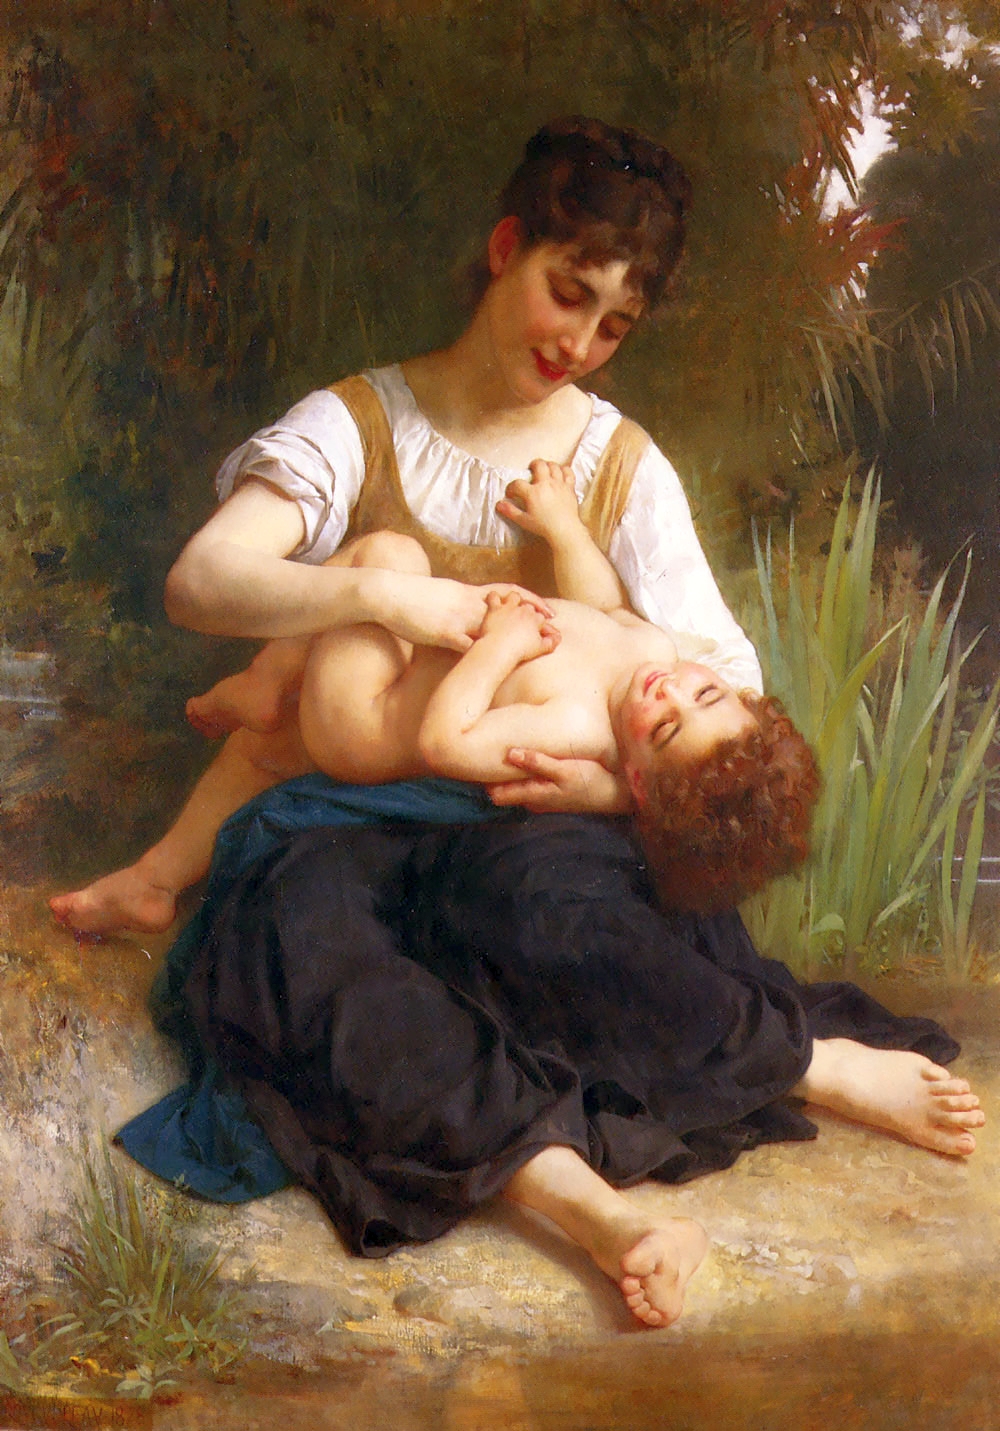 Adolphus Child And Teen (1878).